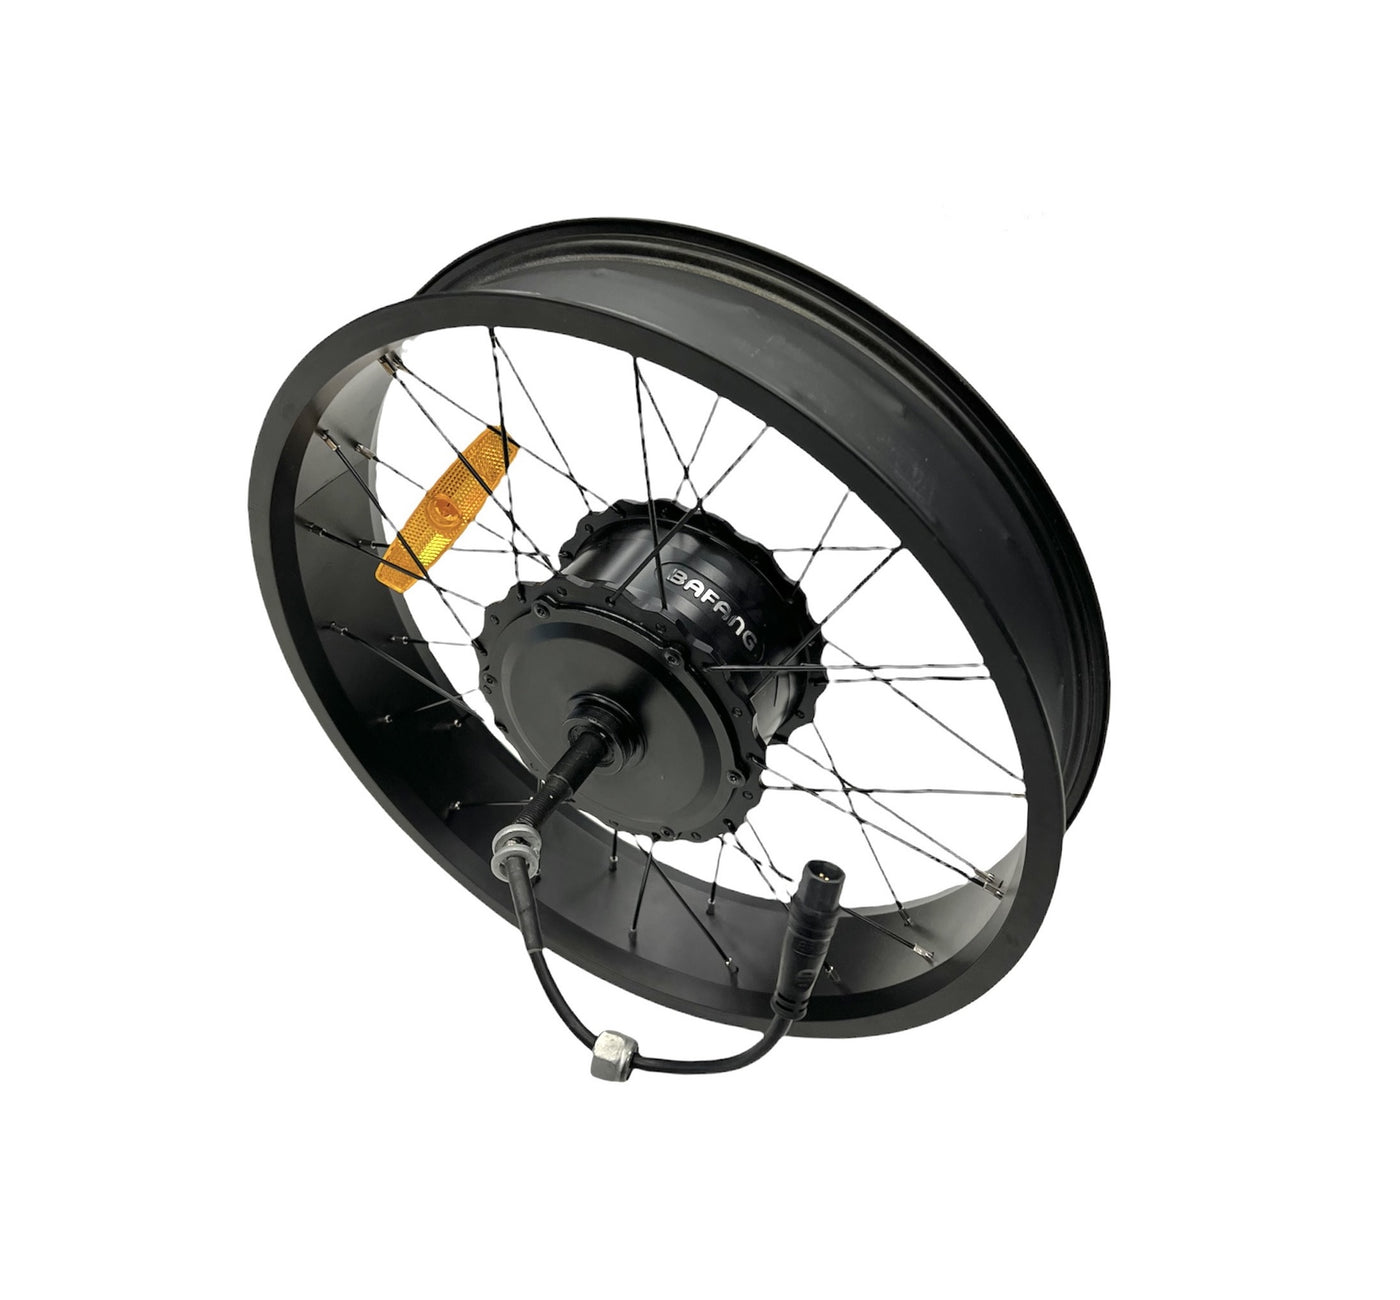 20" Bafang Motor for Fat Tire e-bike with rim, spokes